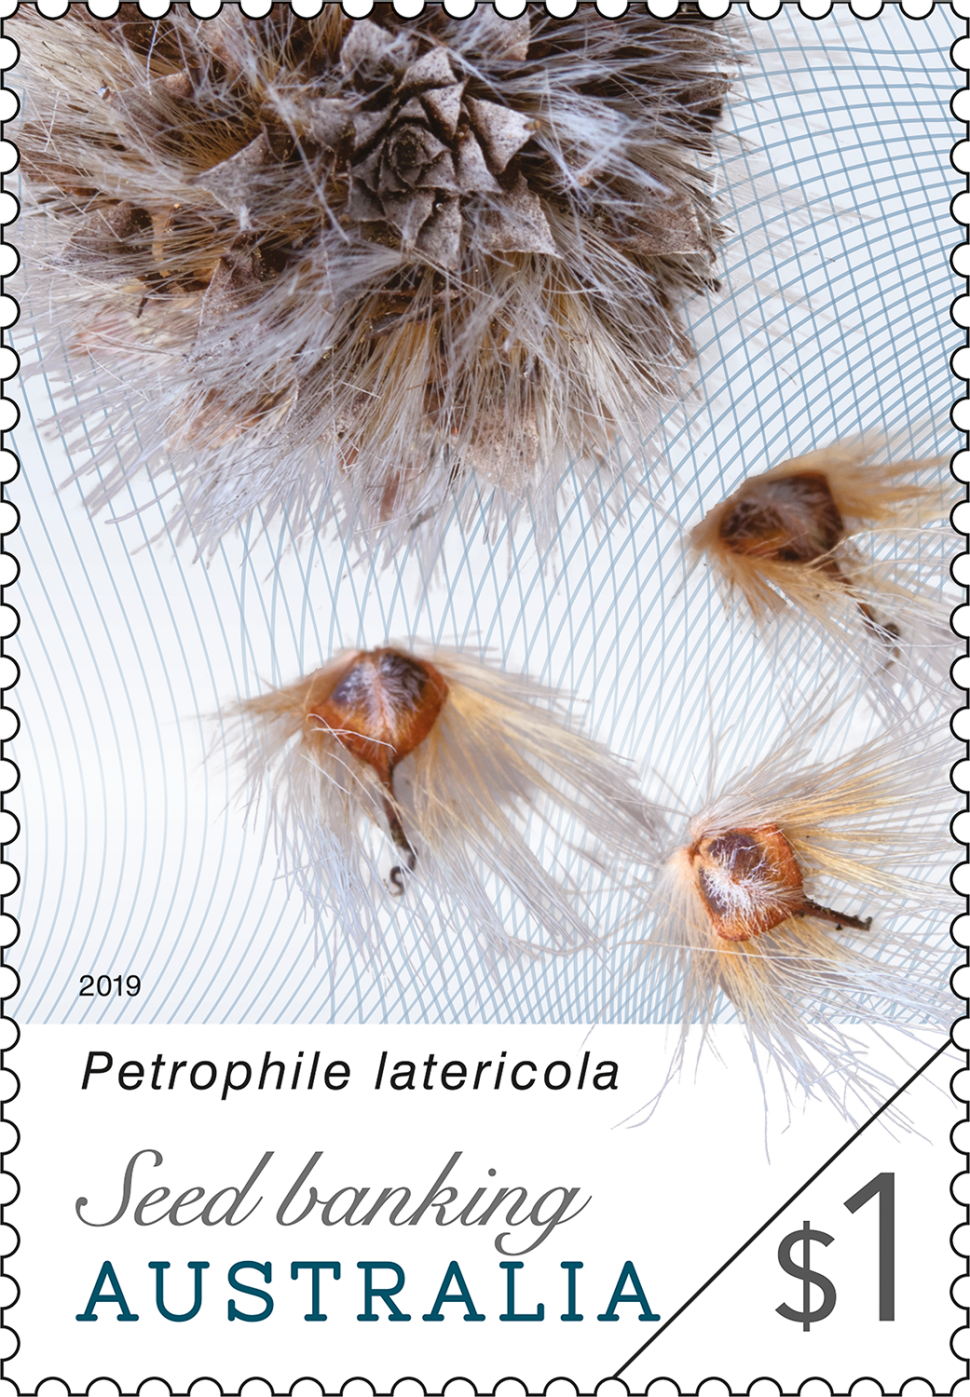 $1 - Petrophile latericola 